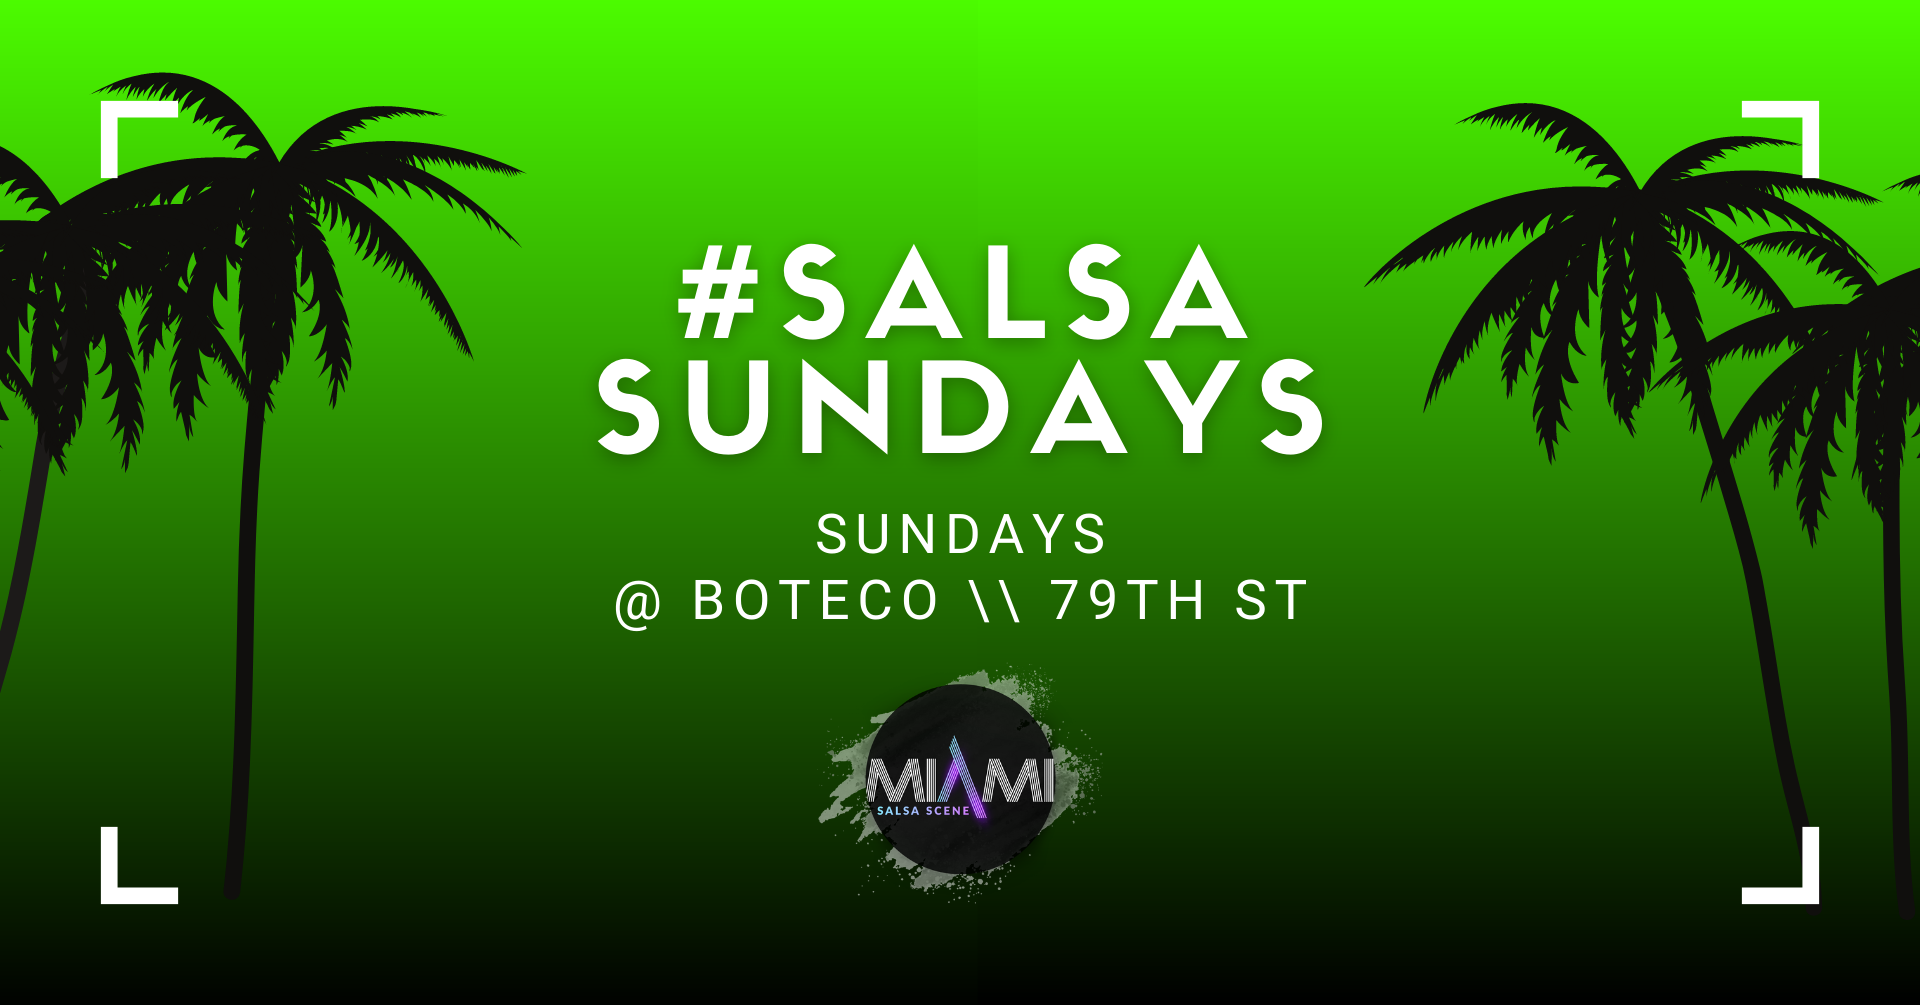 Salsa Sundays at Boteco Miami (79th St)